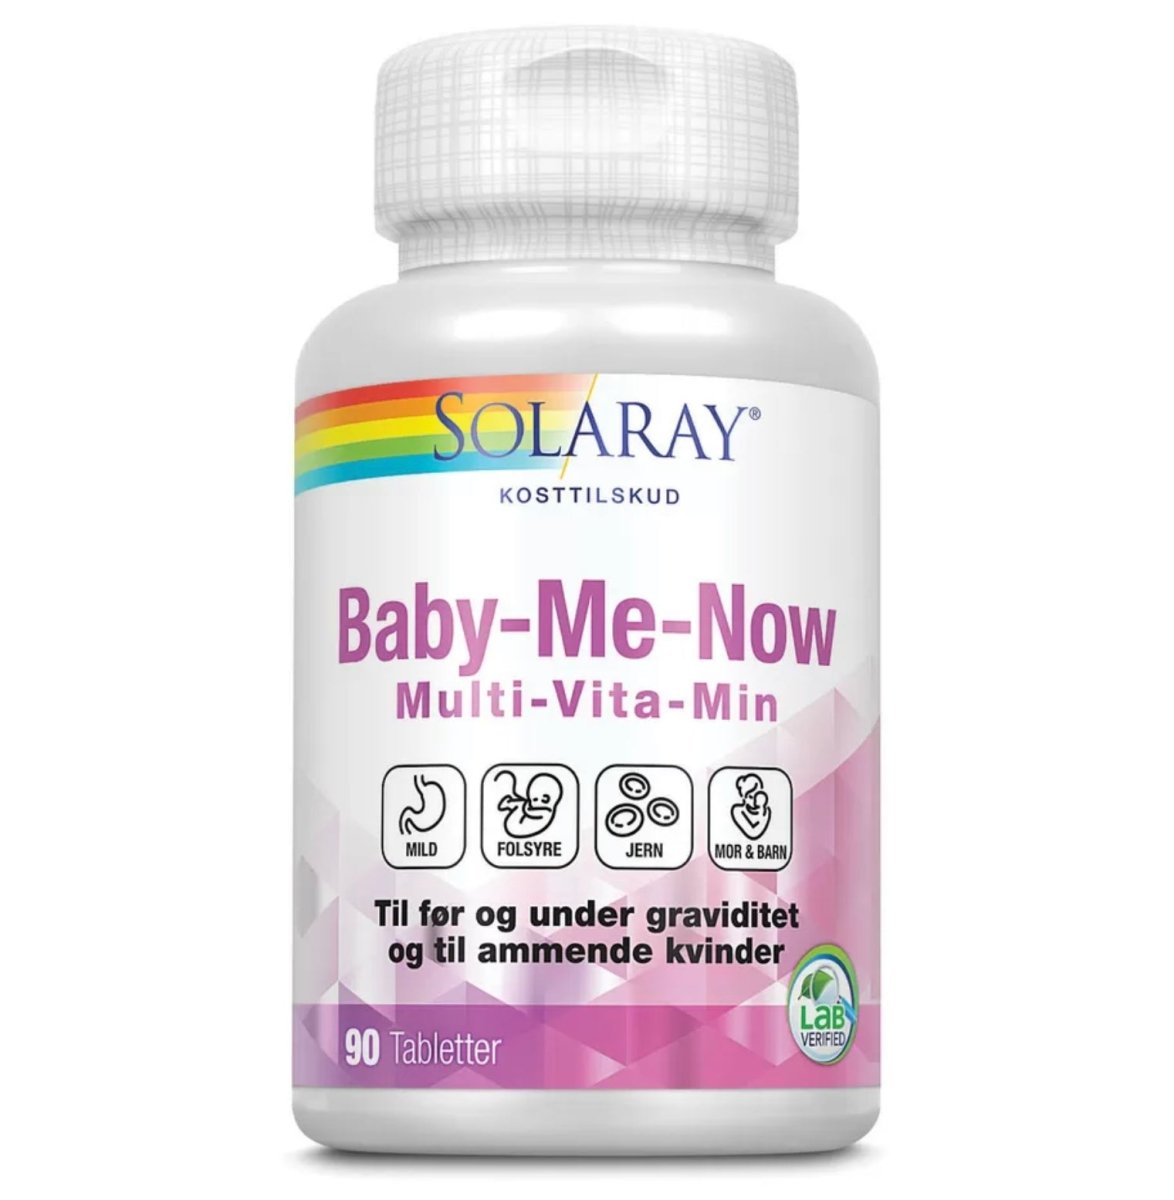 Billede af Solaray Baby - Me - Now multivitaminer, 90 tabletter - Solaray - Vitamins - Buump